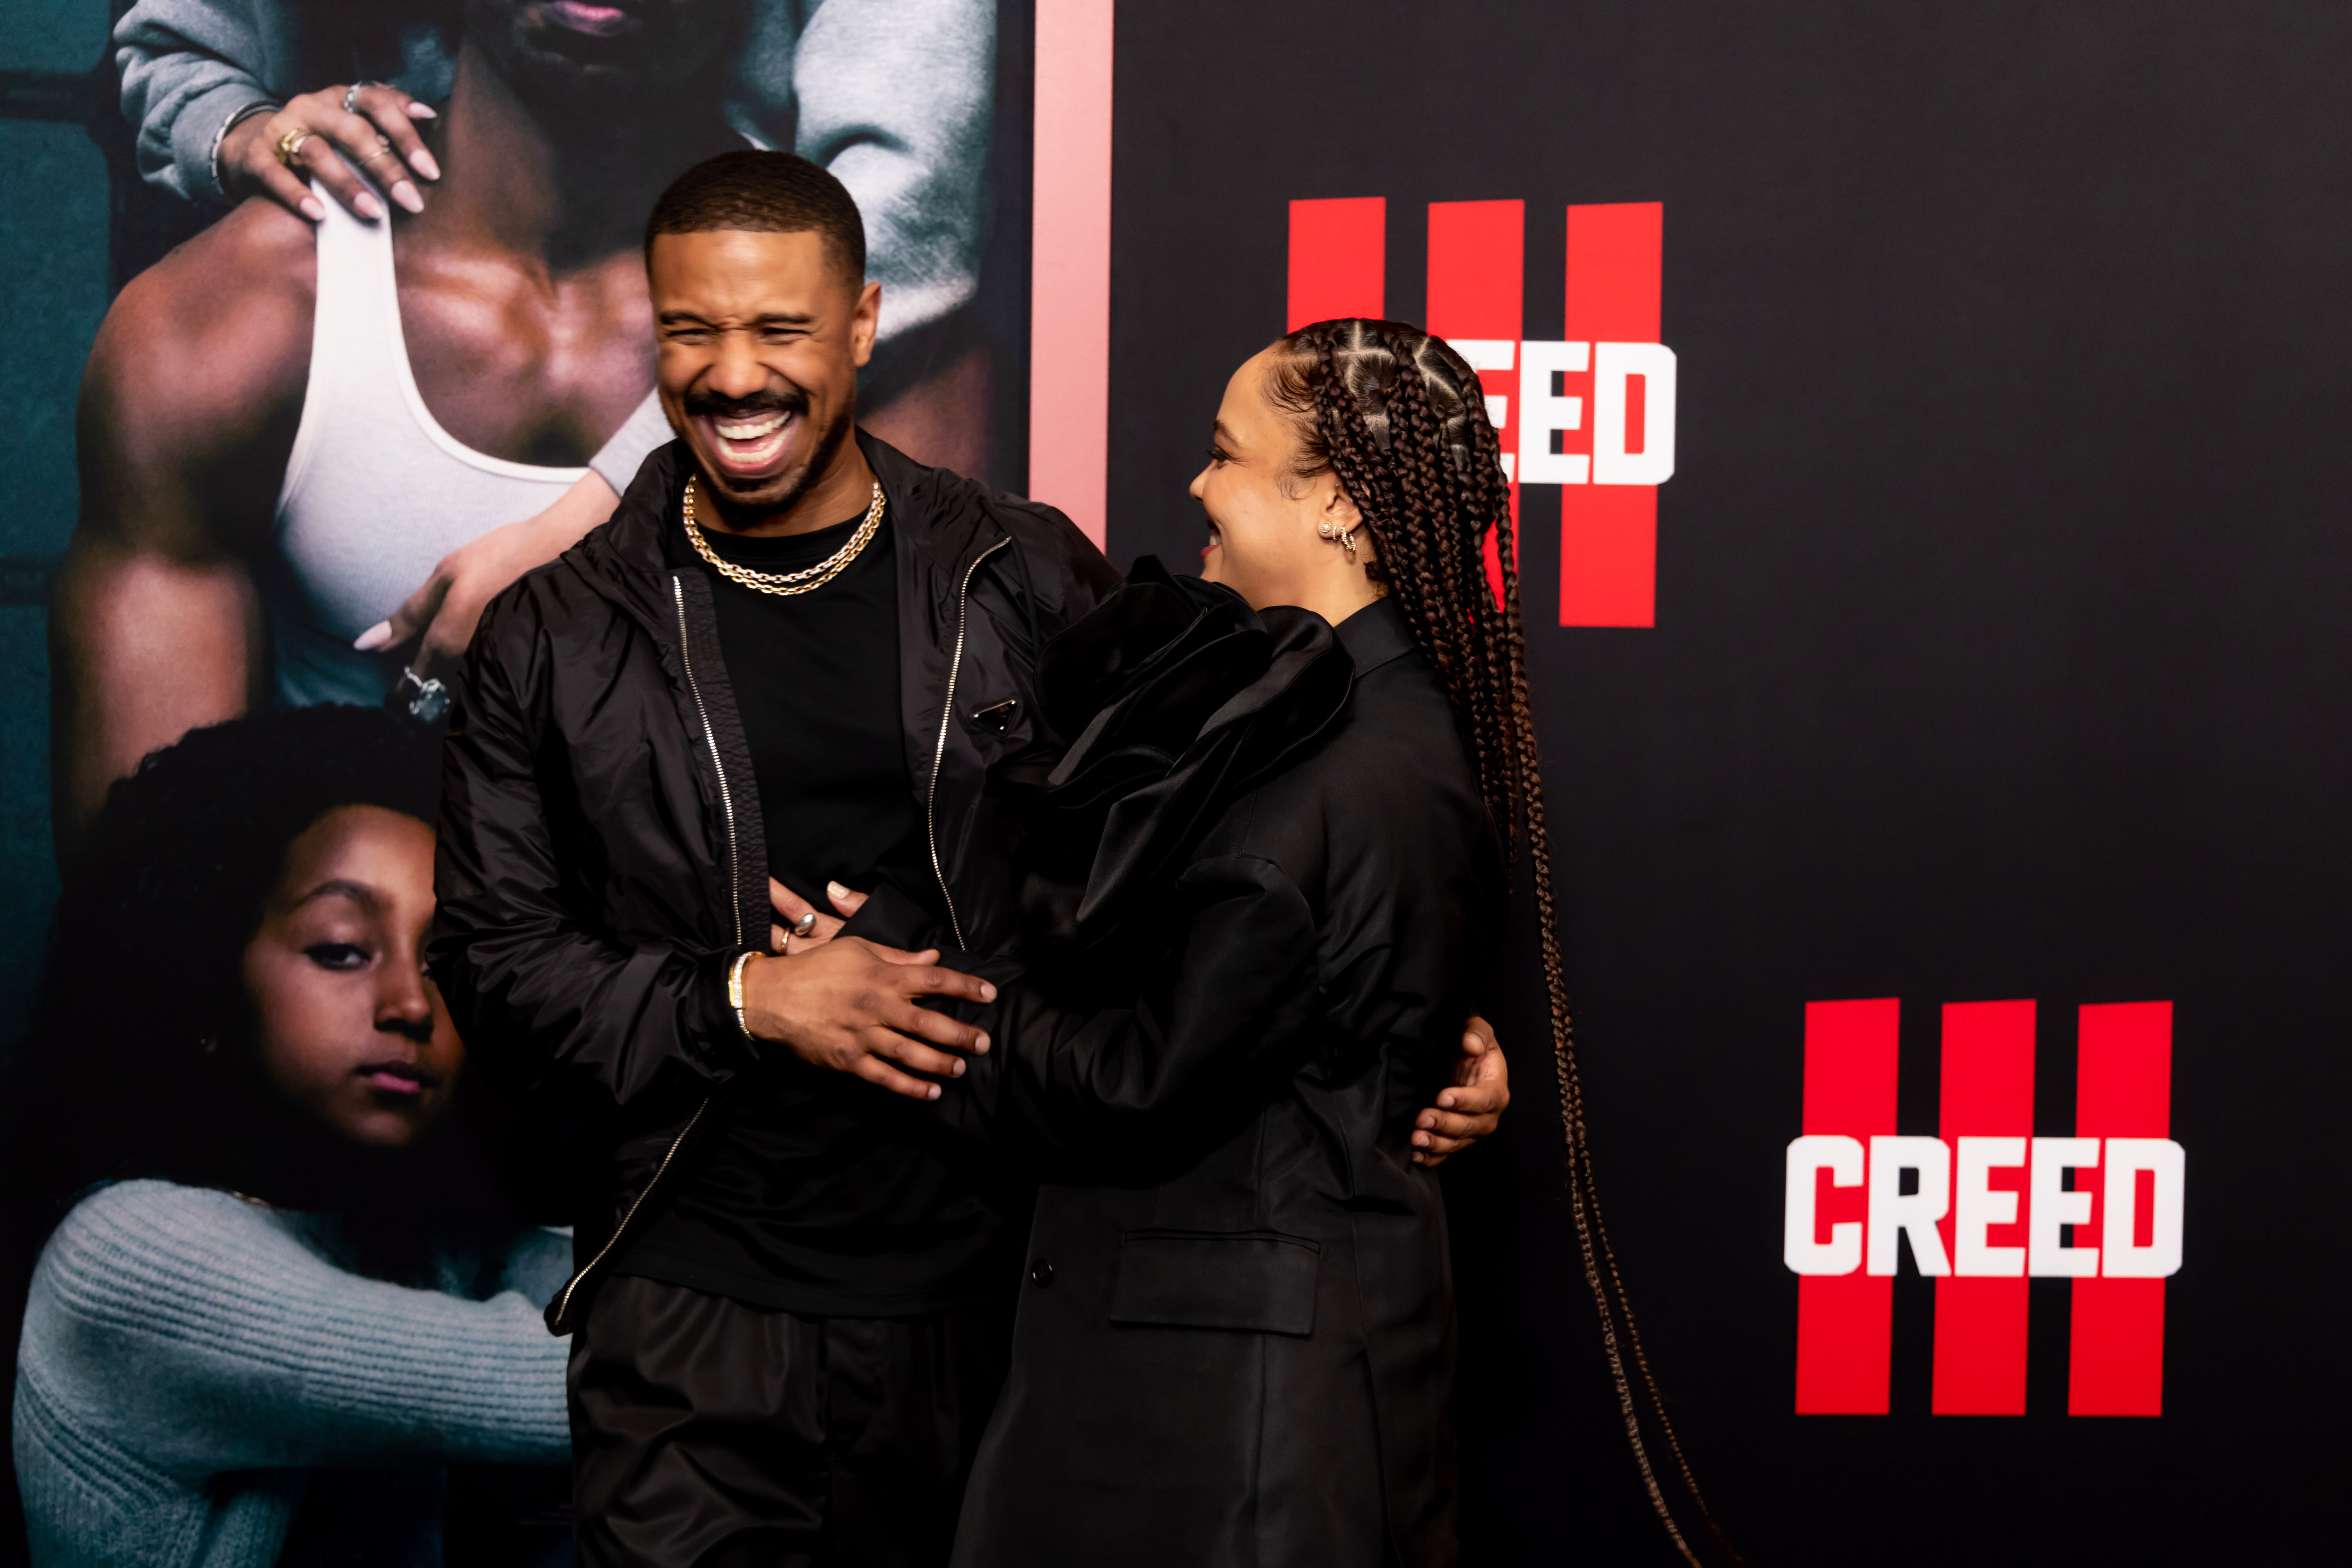 Michael B. Jordan and Tessa Thompson attend the "Creed III" HBCU Atlanta fan screening at Regal Atlantic Station, on February 23, 2023, in Atlanta, Georgia. | Source: Getty Images